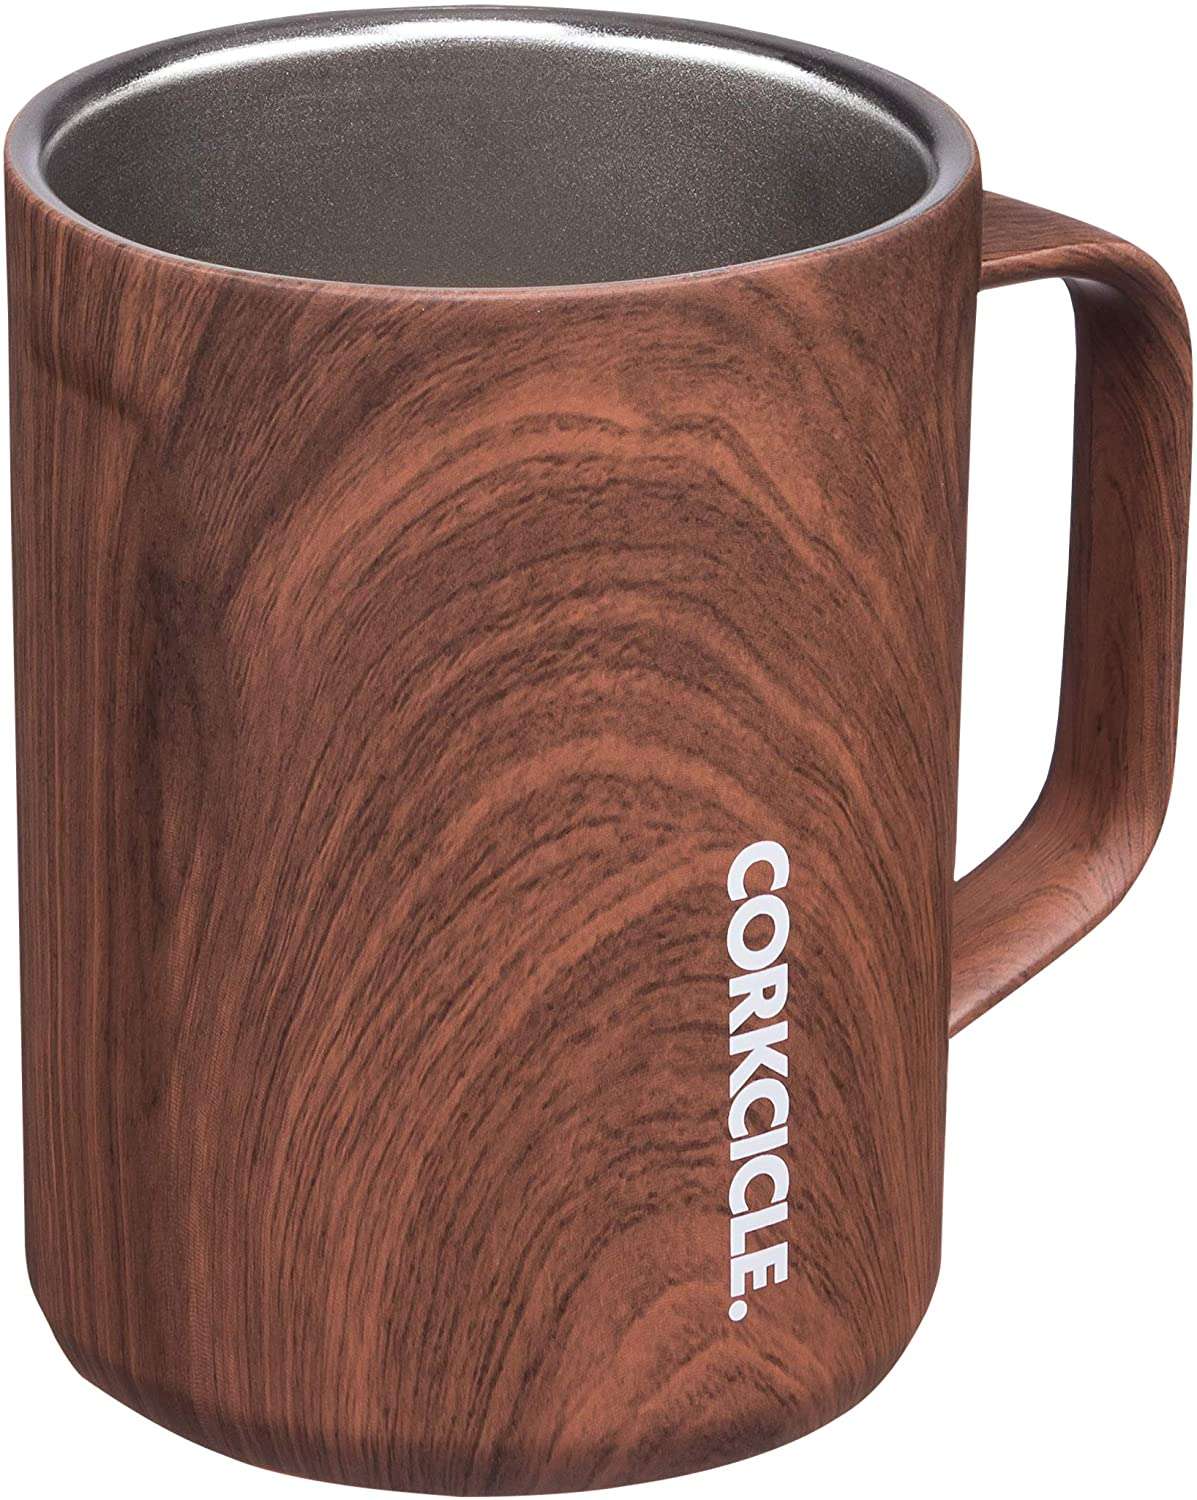 Mug That Keeps Coffee Hot The Longest